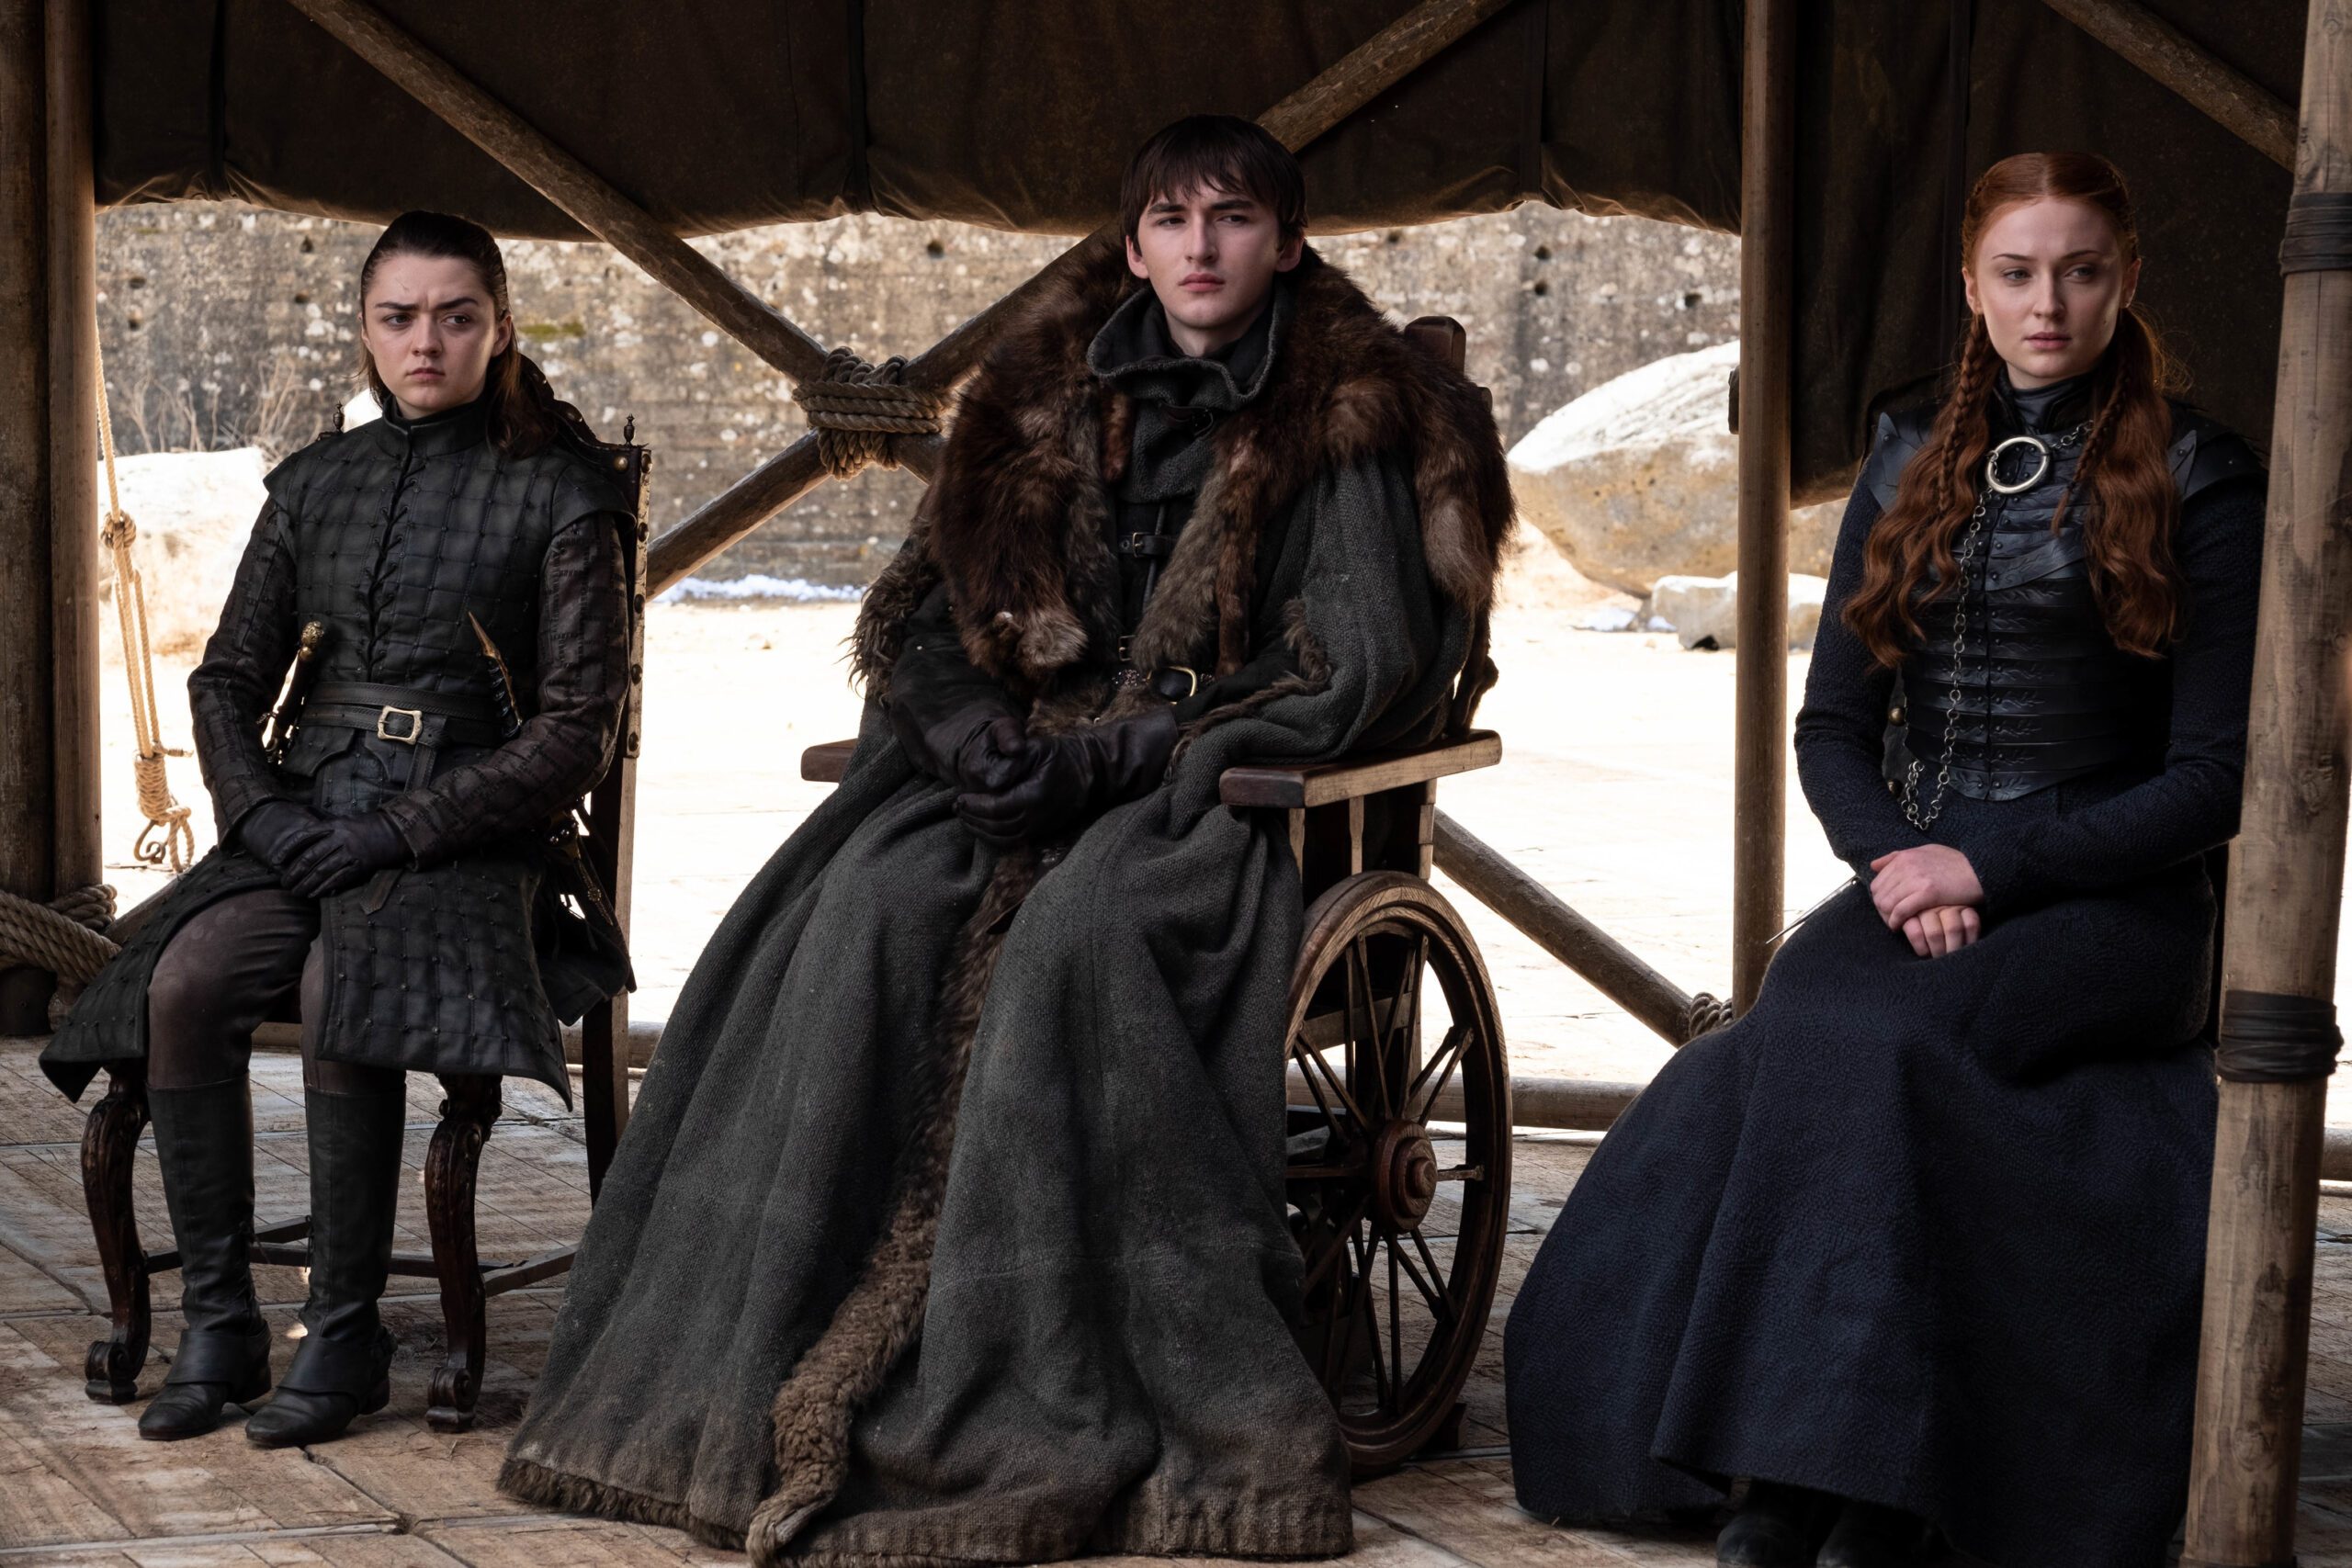 ‘Game of Thrones’ finale: Kit Harington flew to Spain ‘as decoy’